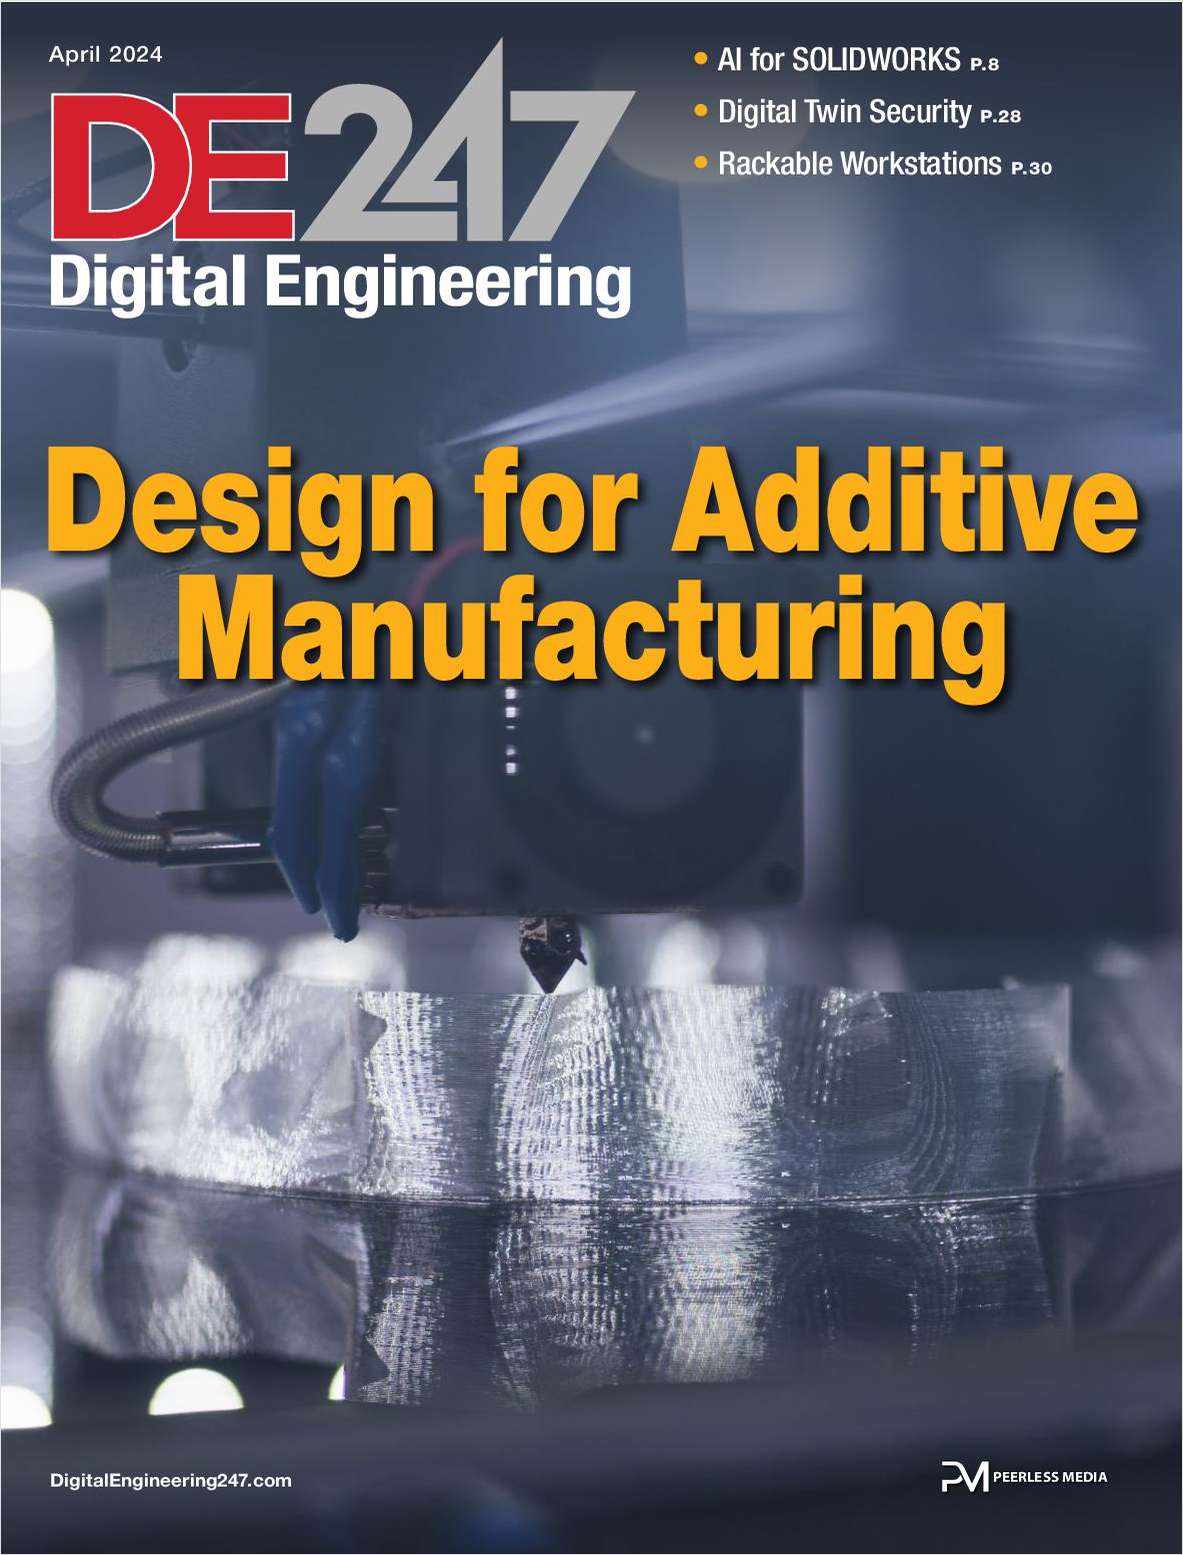 Digital Engineering: Design for Additive Manufacturing